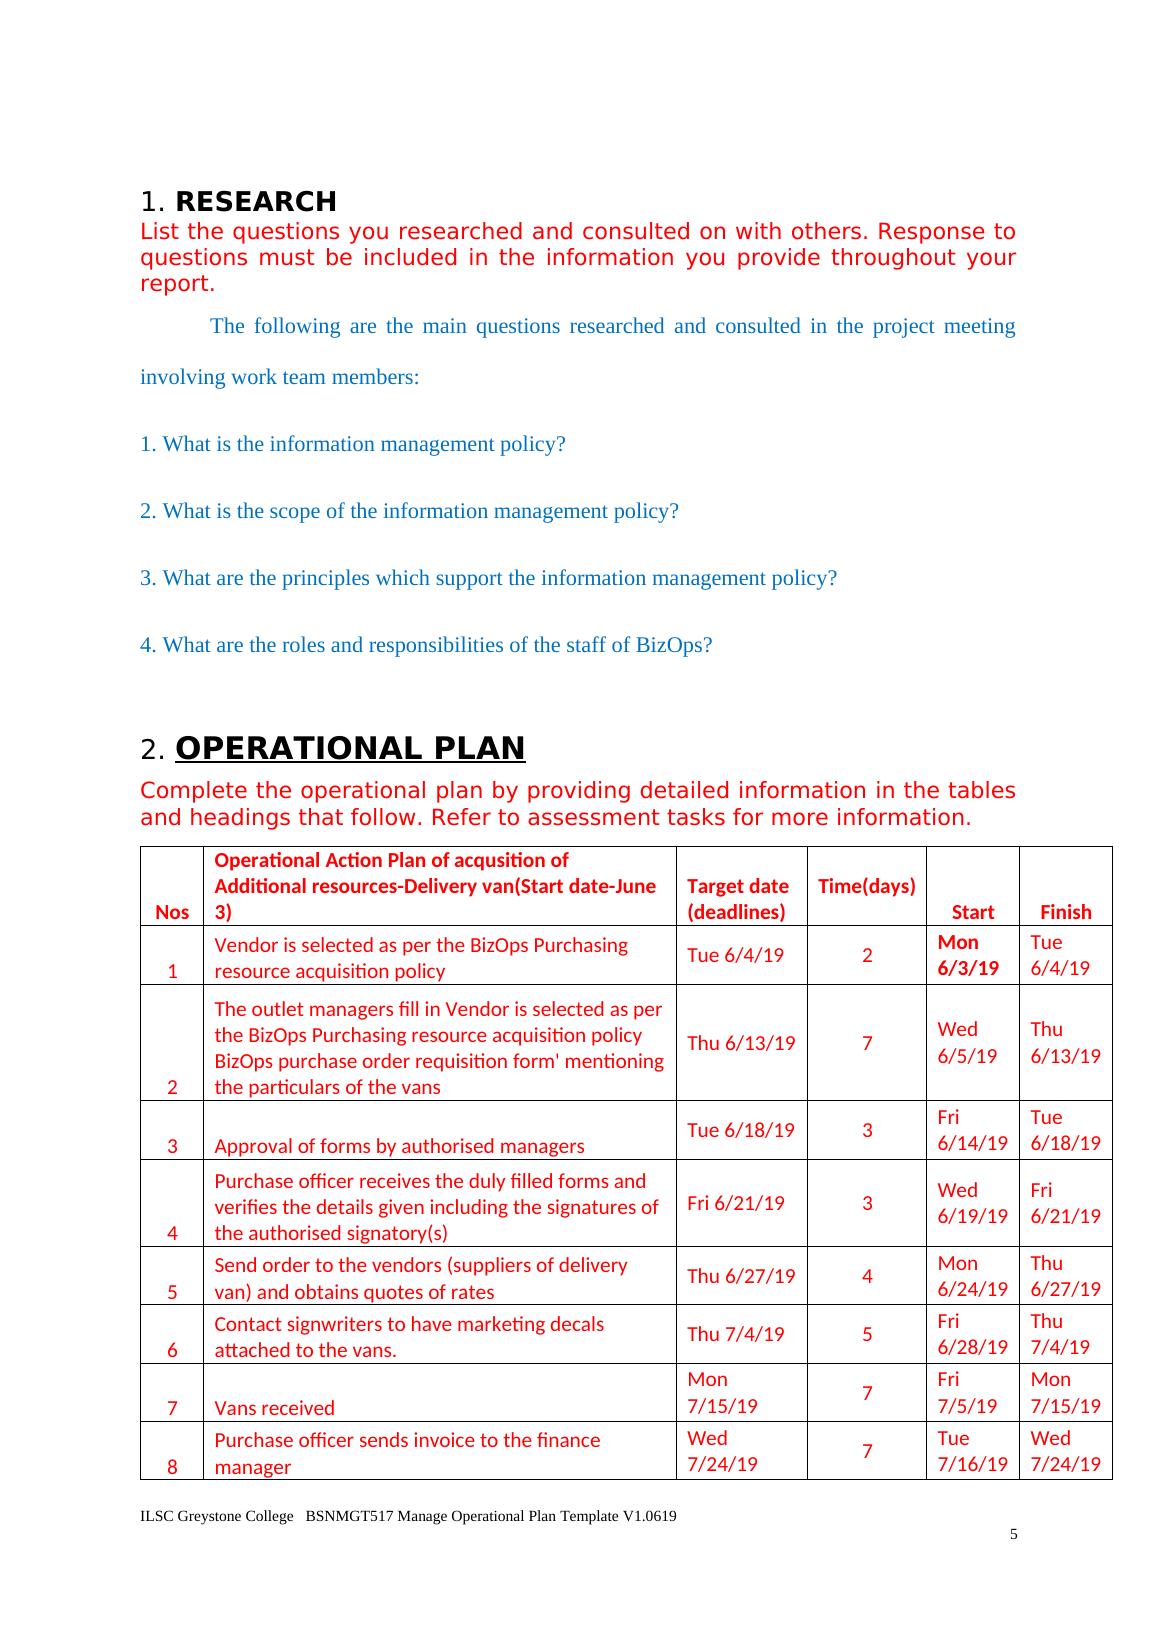 Operational Plan for BizOps Enterprises_5